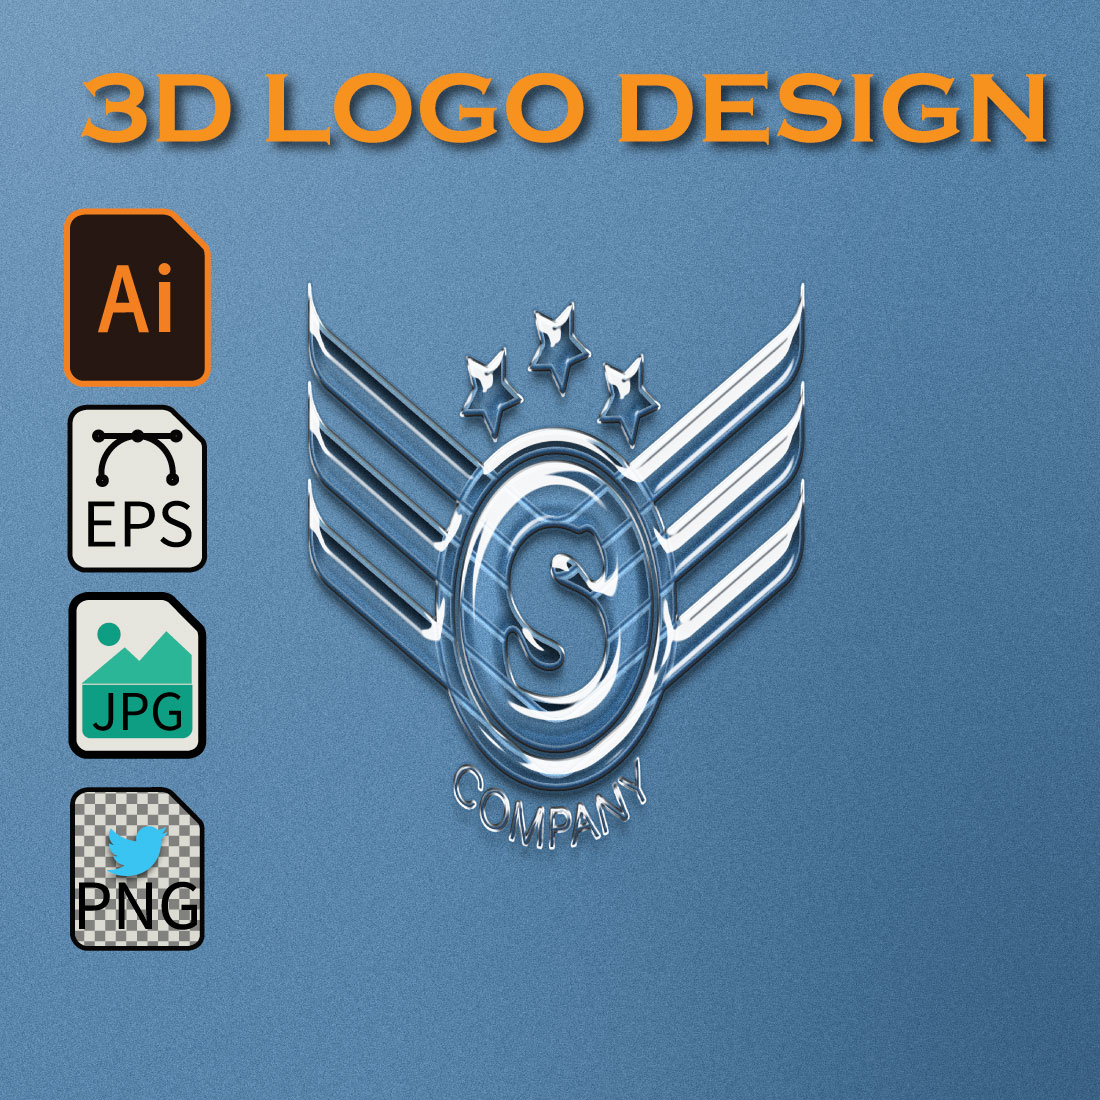 3D Logo Design cover image.